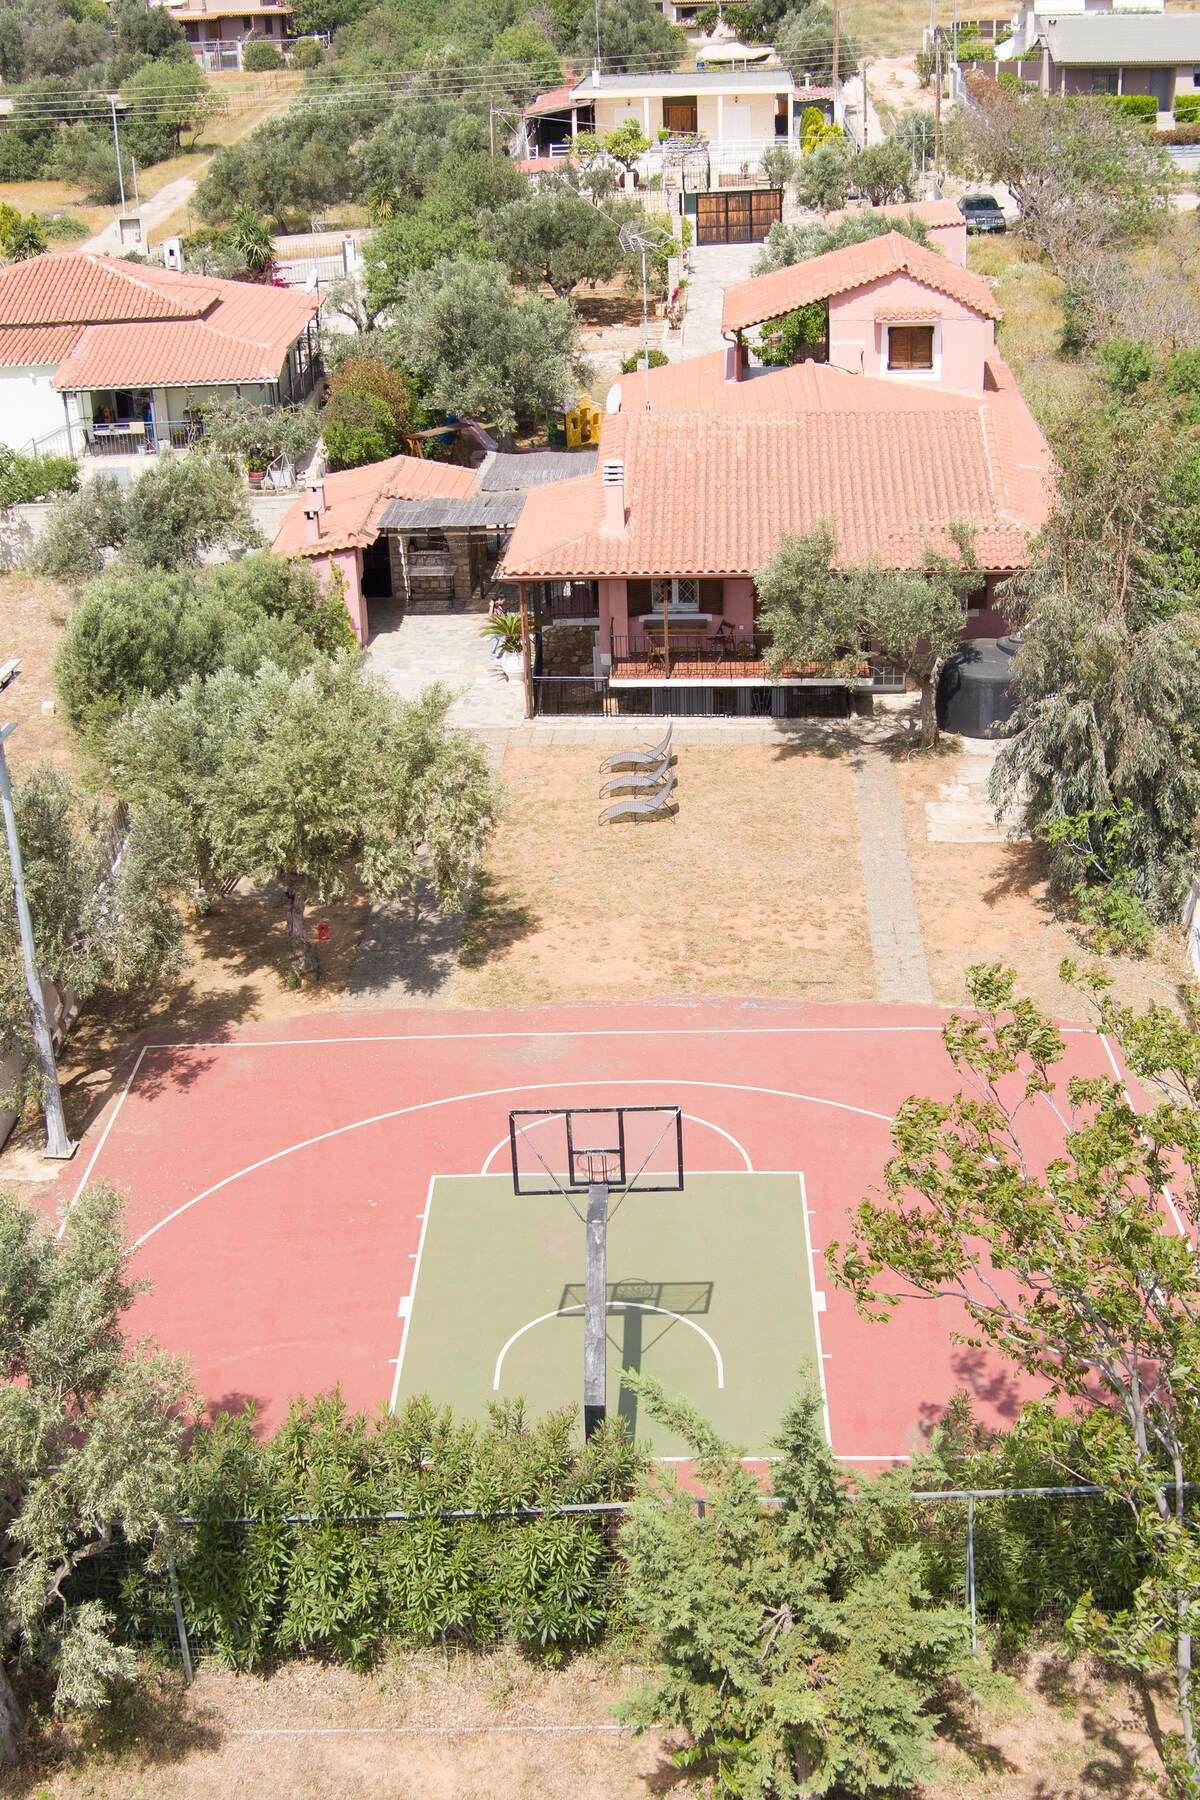 Terra home - Basketball seaside 4bdrm riviera villa